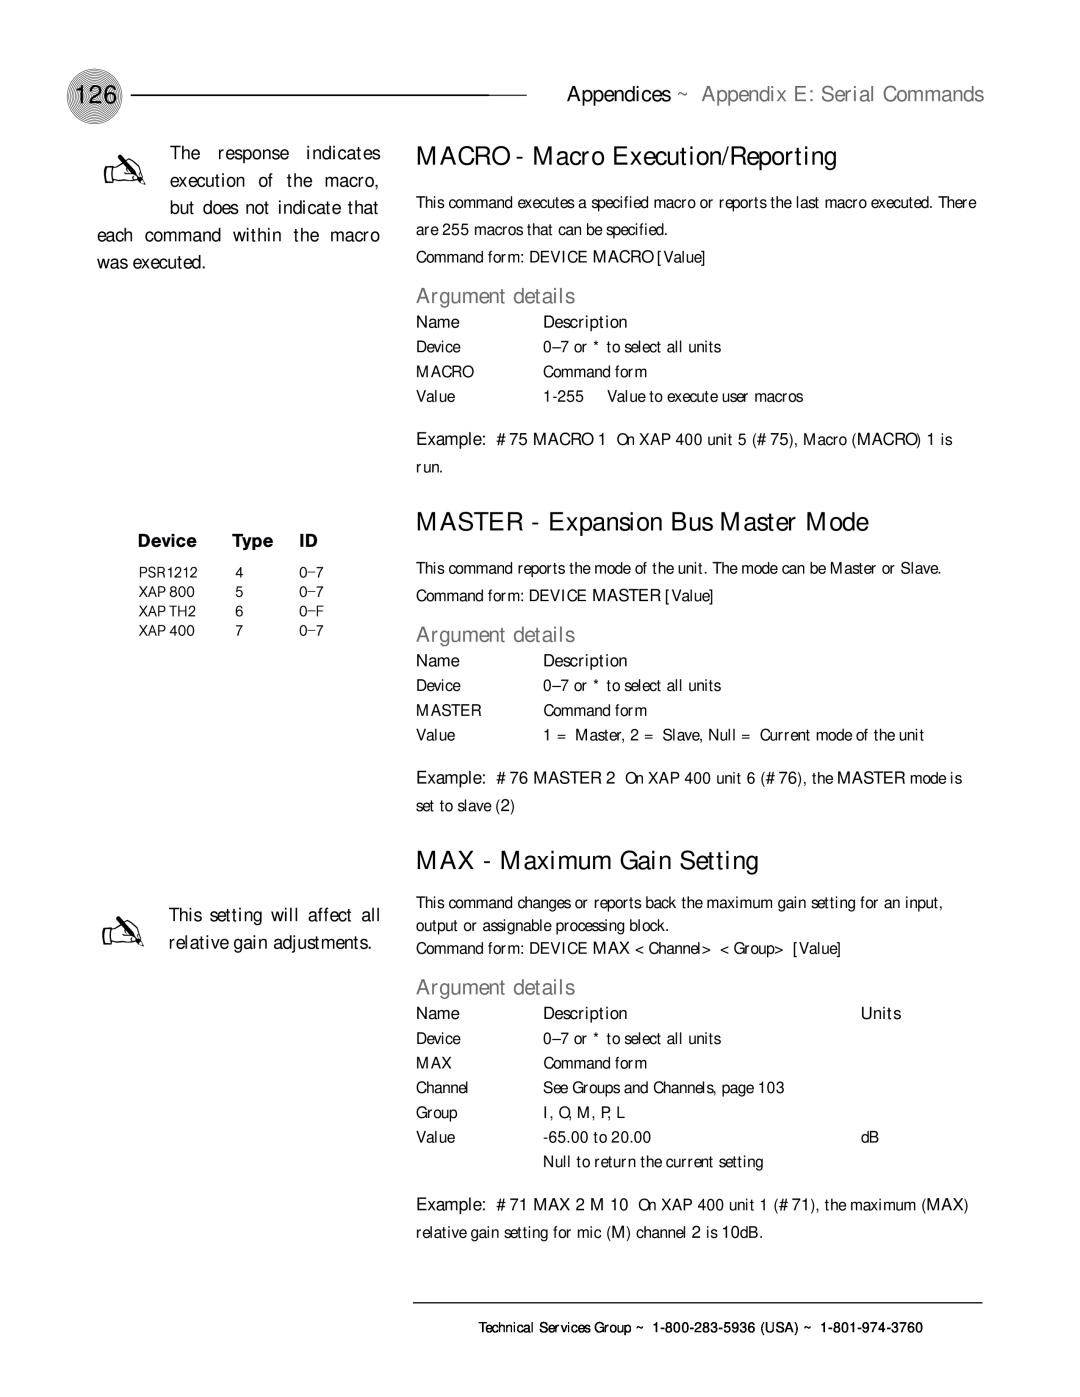 ClearOne comm XAP 400 MACRO - Macro Execution/Reporting, MASTER - Expansion Bus Master Mode, MAX - Maximum Gain Setting 